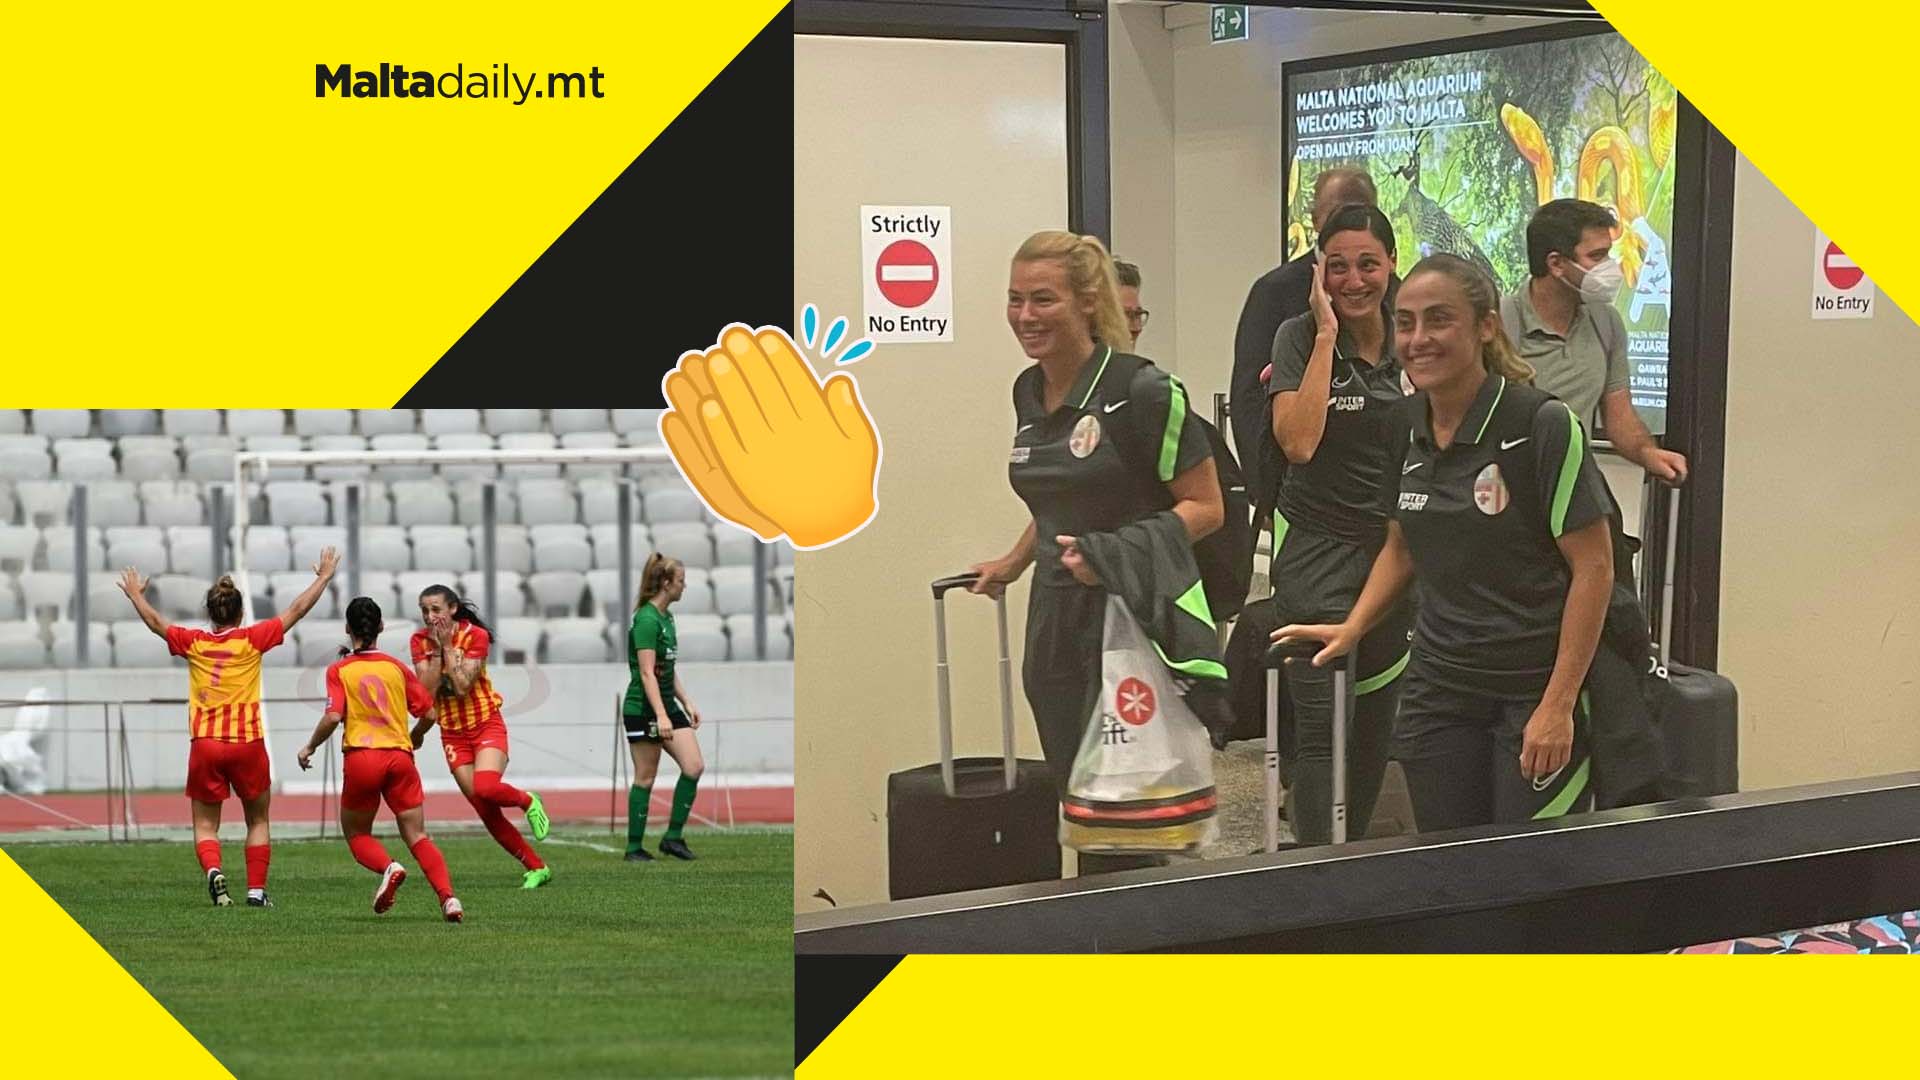 Birkirkara women’s team receives heroic welcome after historical win